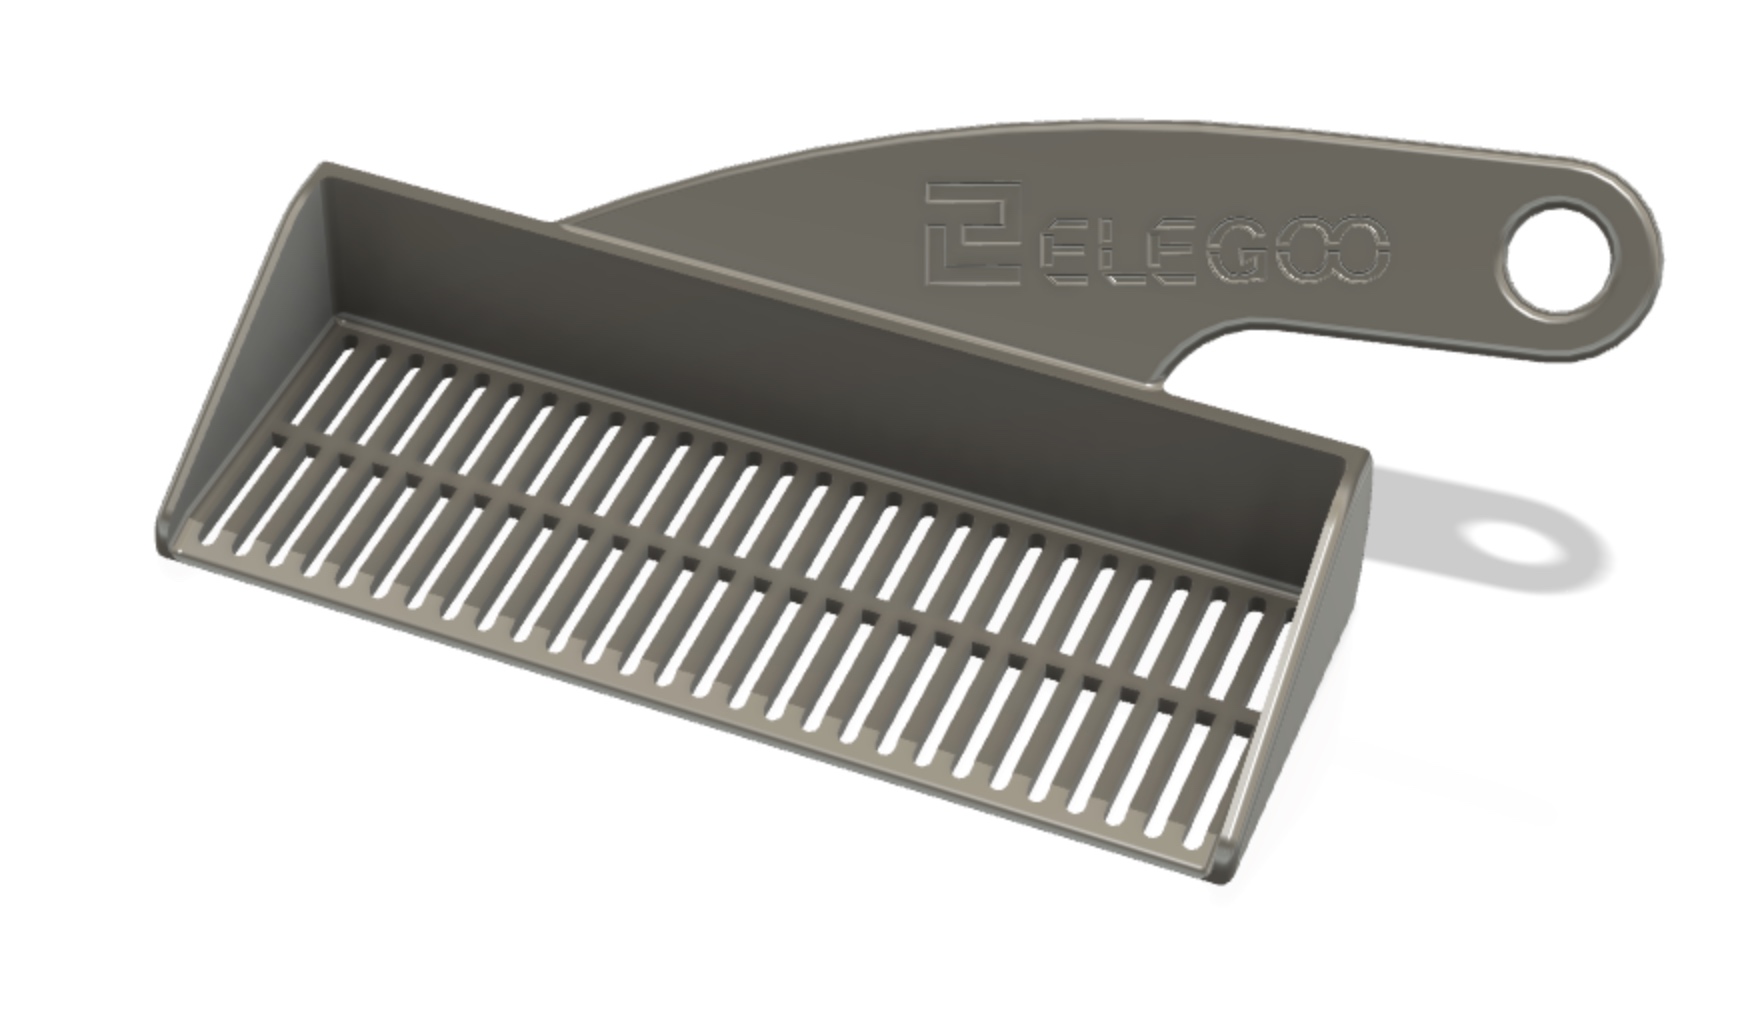 VAT cleaning tool for Elegoo Mars 2 Pro